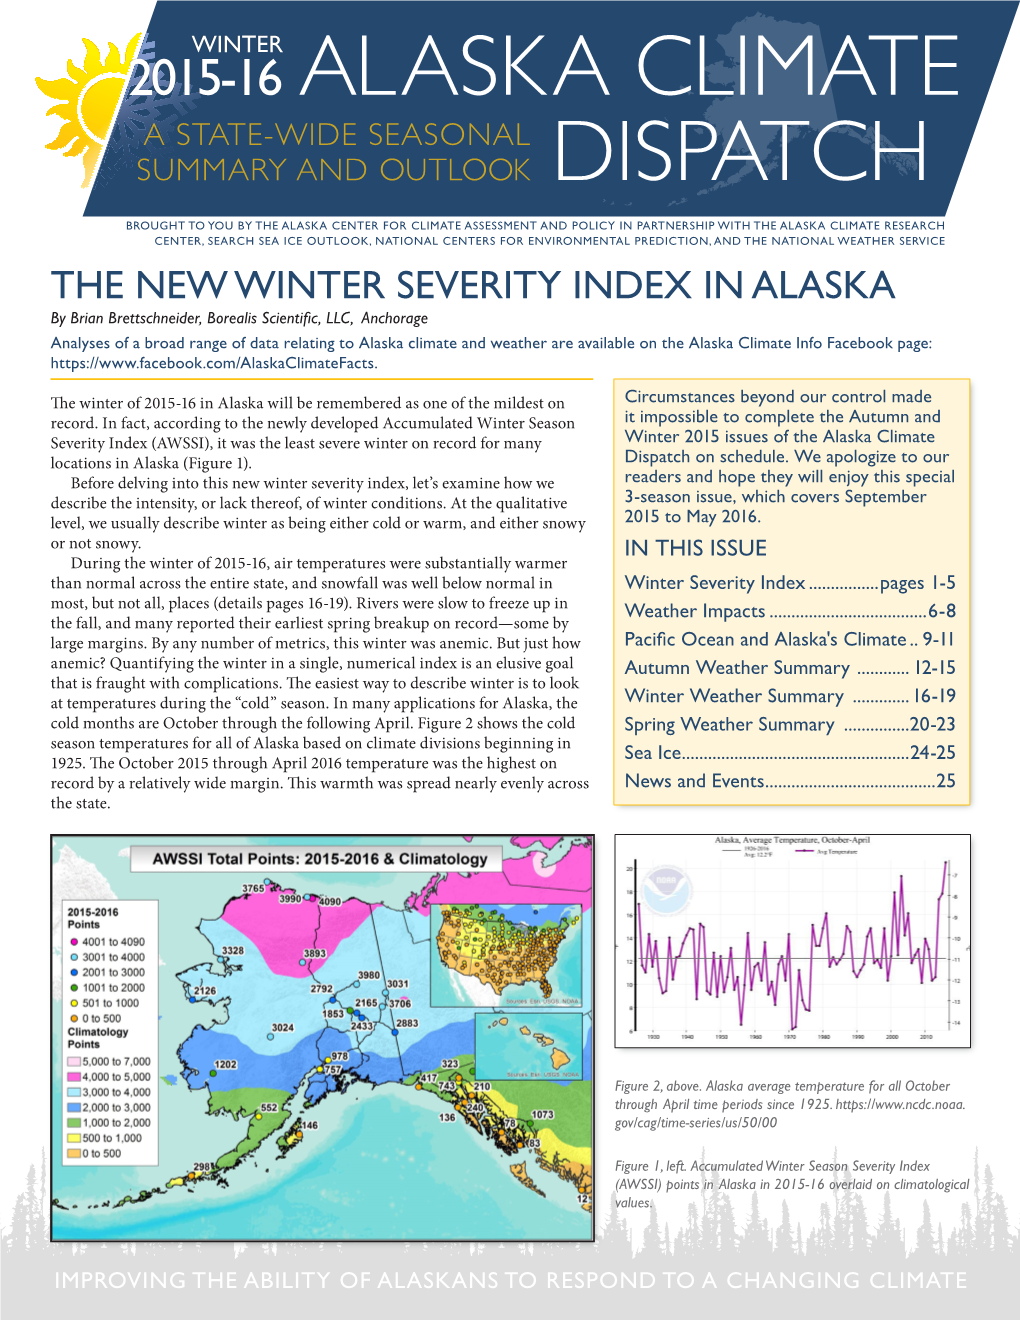 Alaska Climate Dispatch Sept 2015